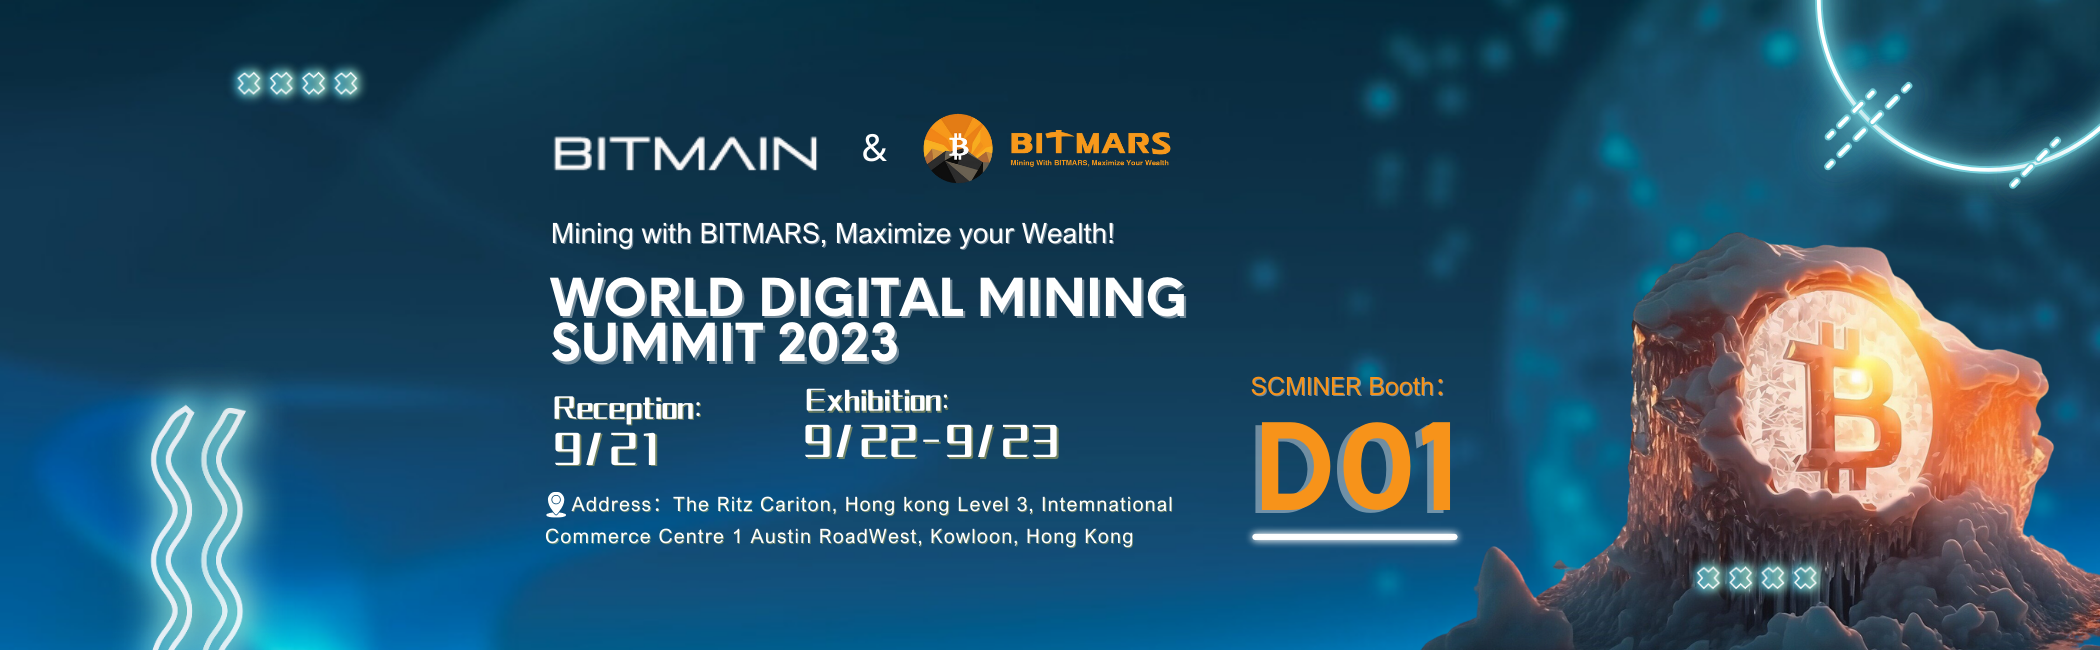 World Digital Mining Summit 2023